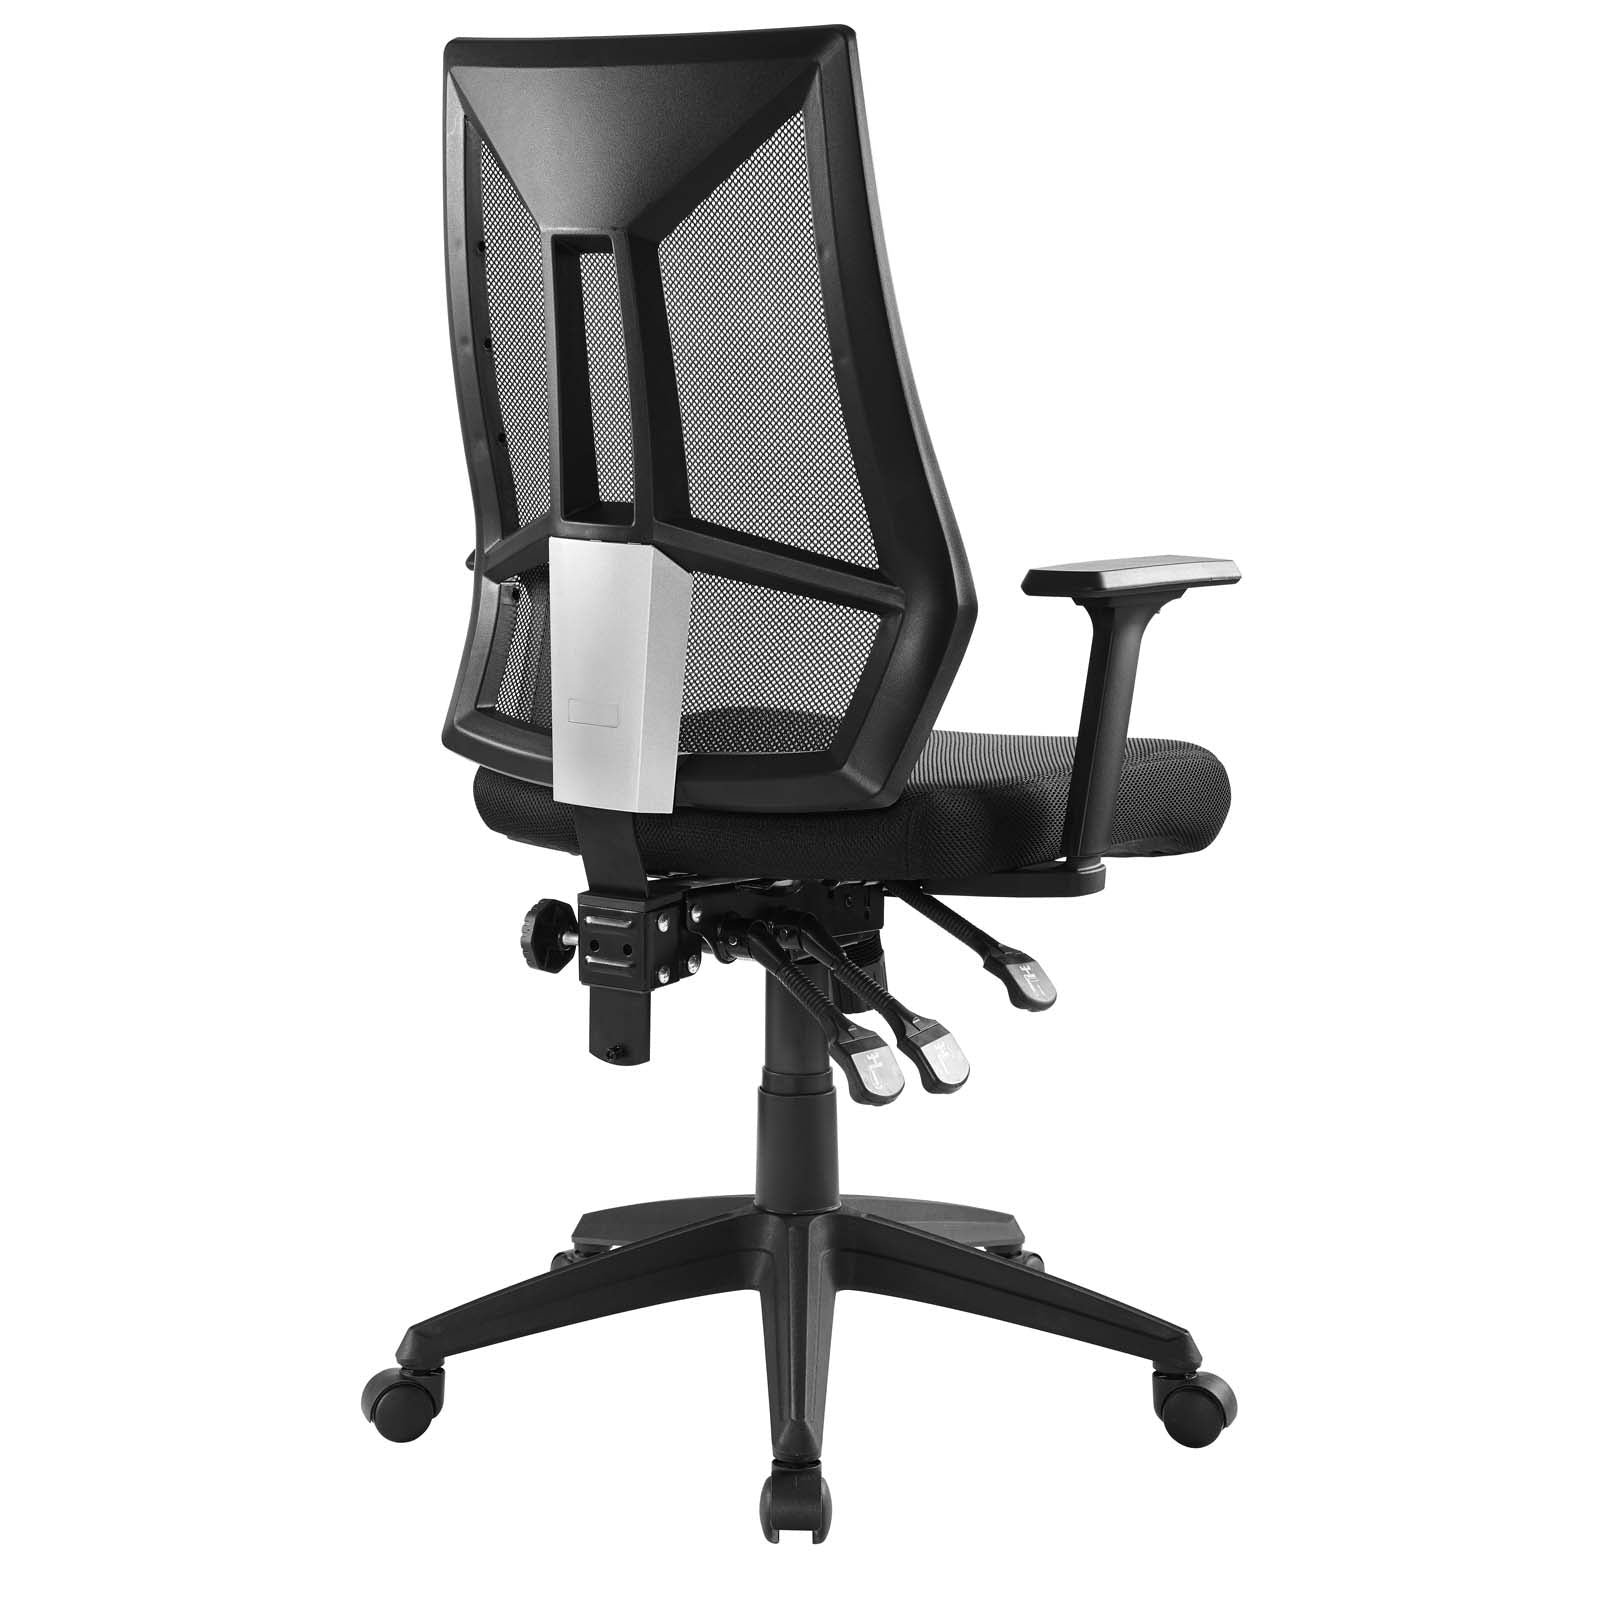 Factor Mesh Office Chair